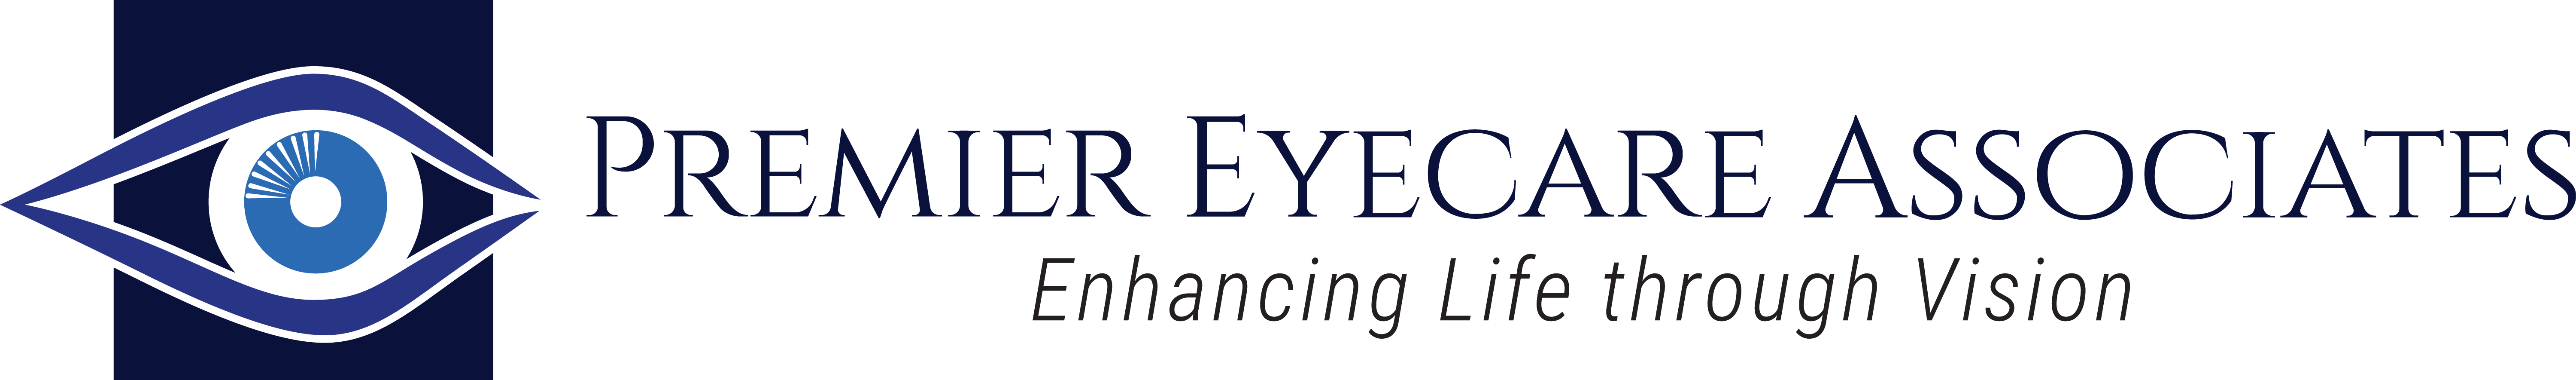 Premier Eyecare Assocoates logo horizontal tagline colored